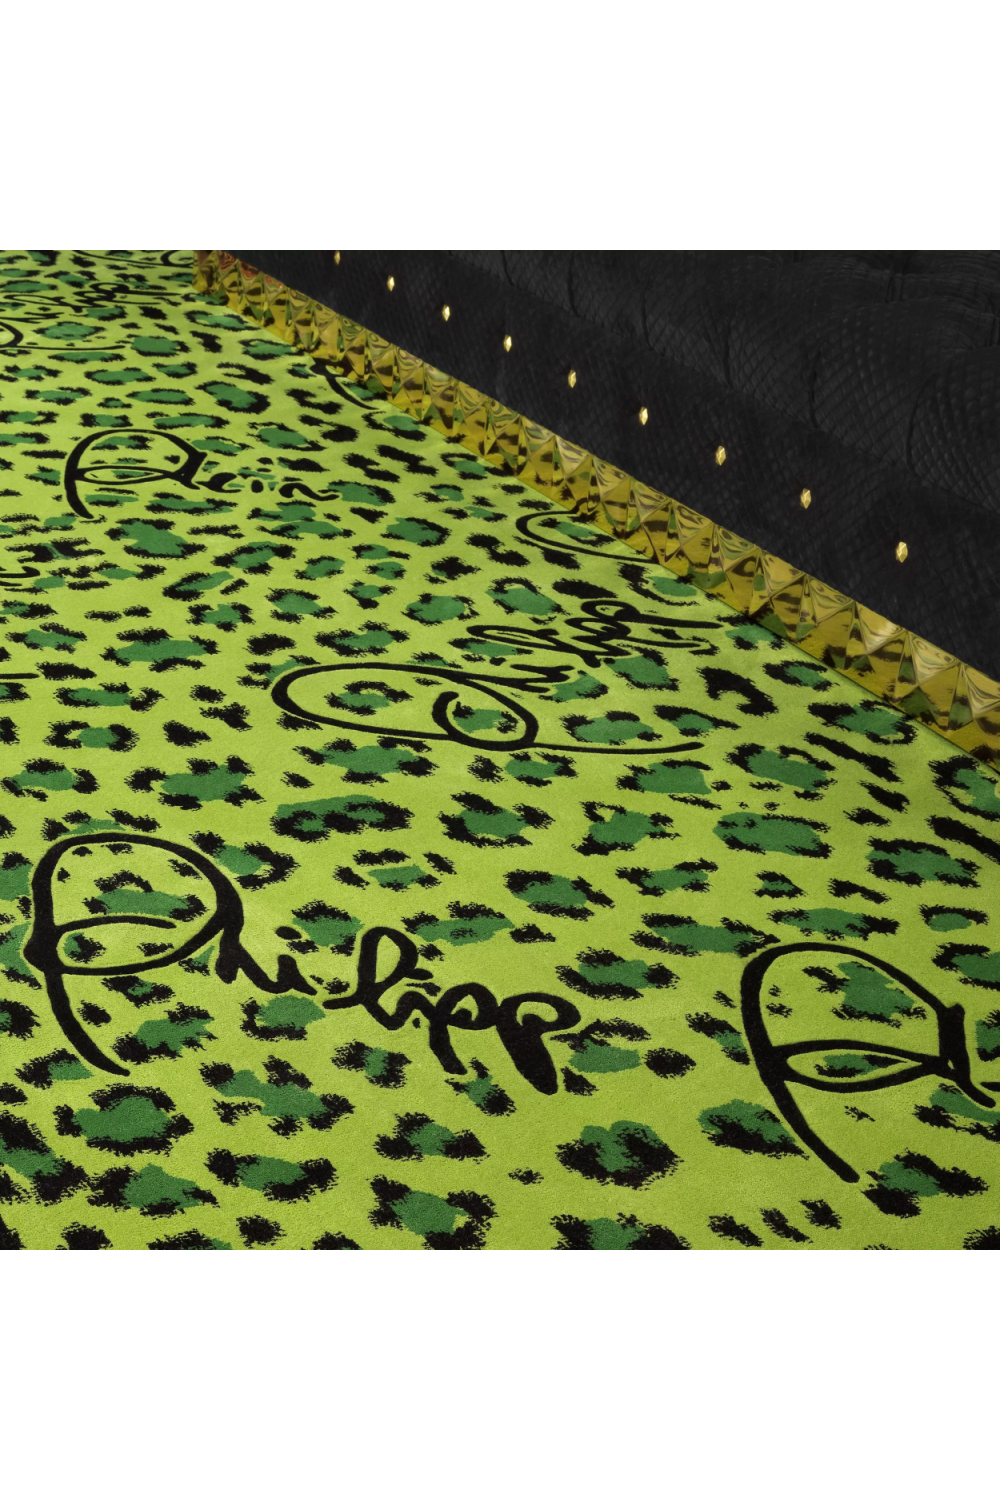 Green Panther Printed Wool Carpet 10' x 13' | Philipp Plein Jungle | Oroa.com